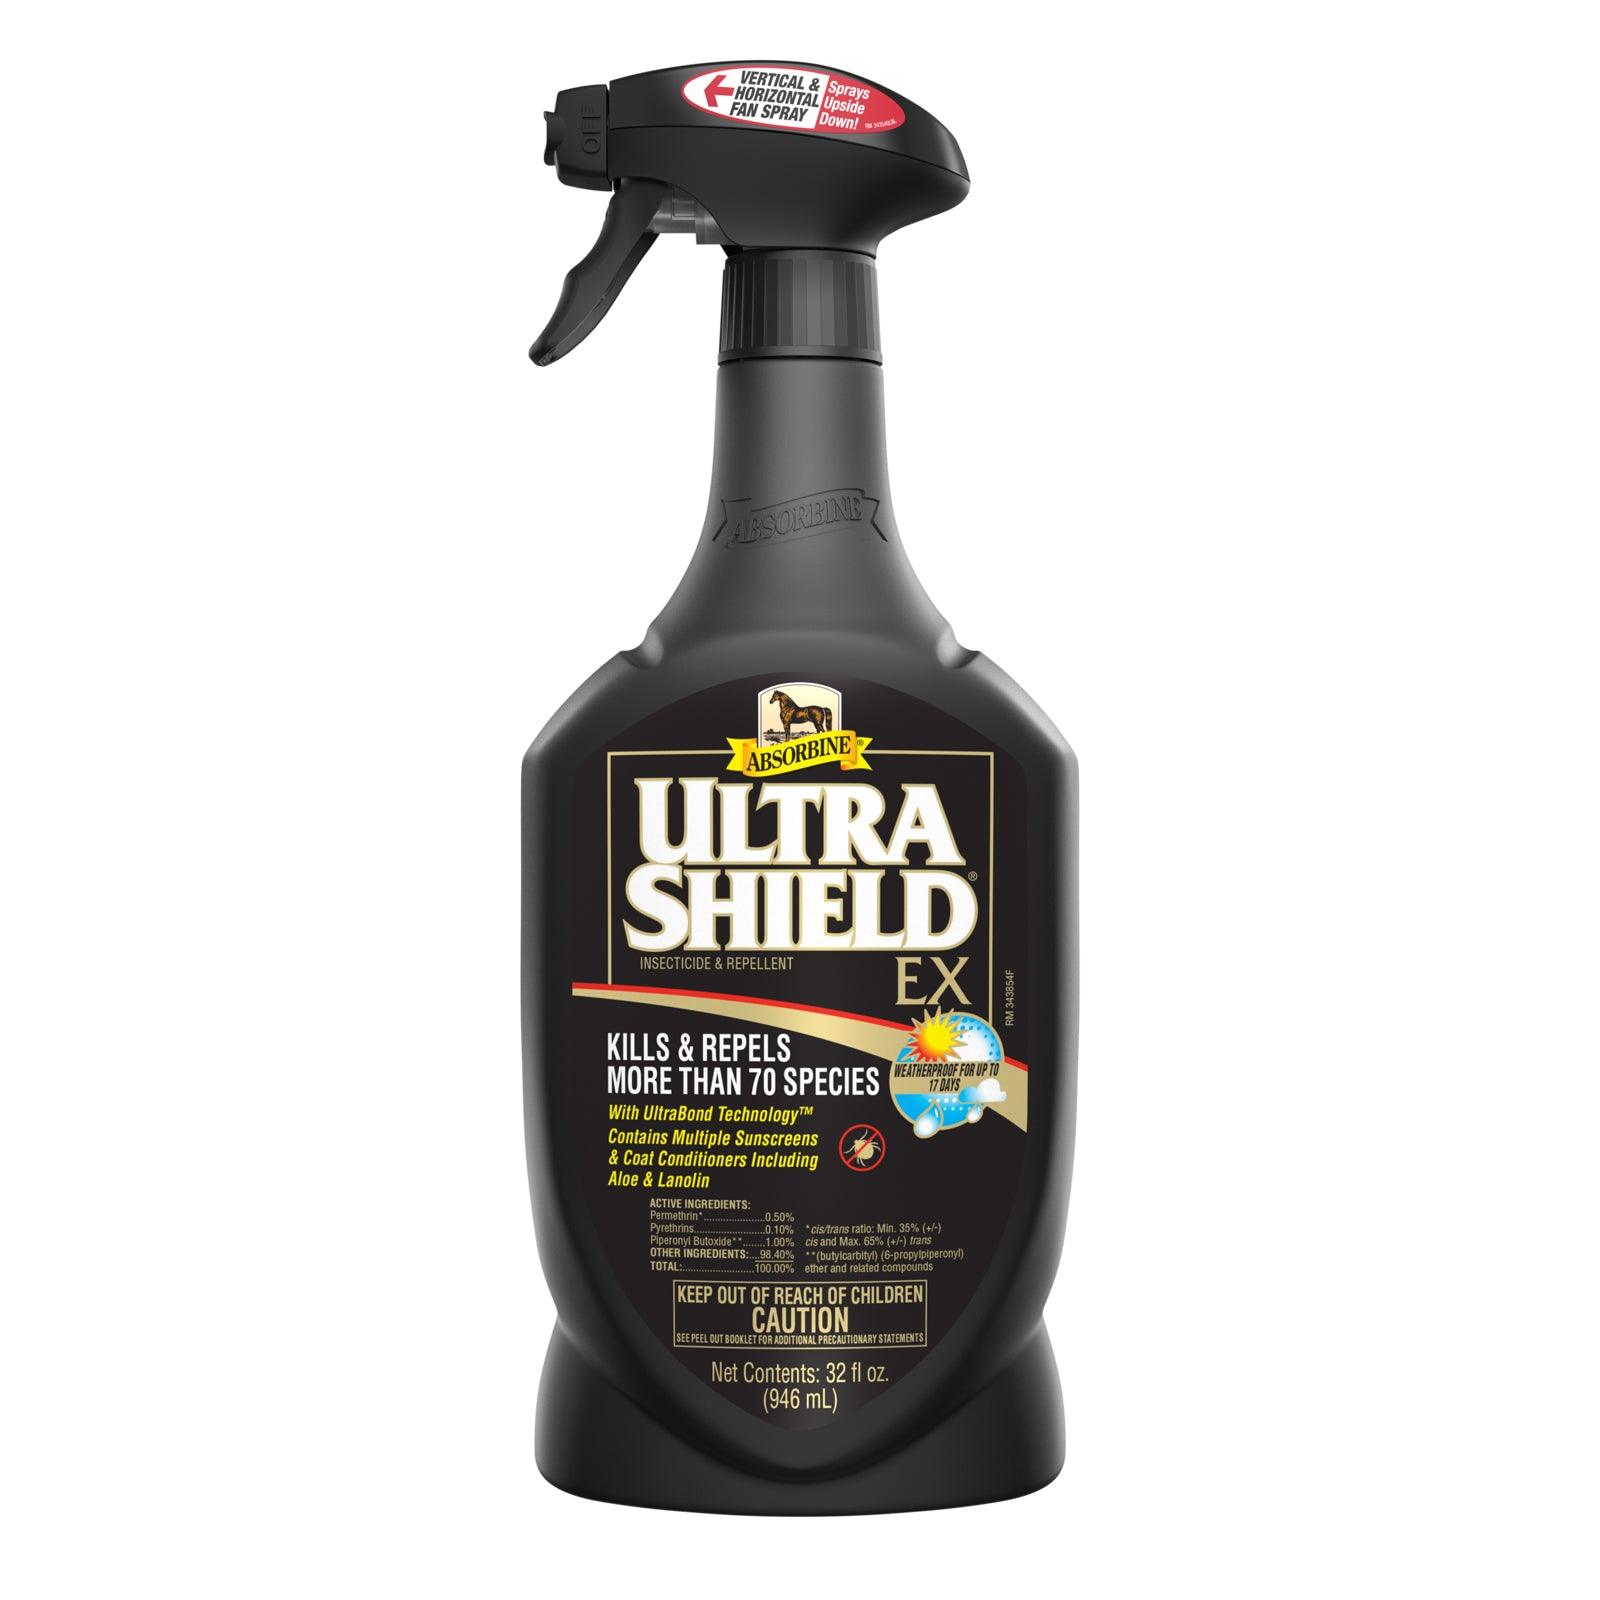 32 fluid ounce quart sprayer of UltraShield EX, kills & repels more than 70 species.